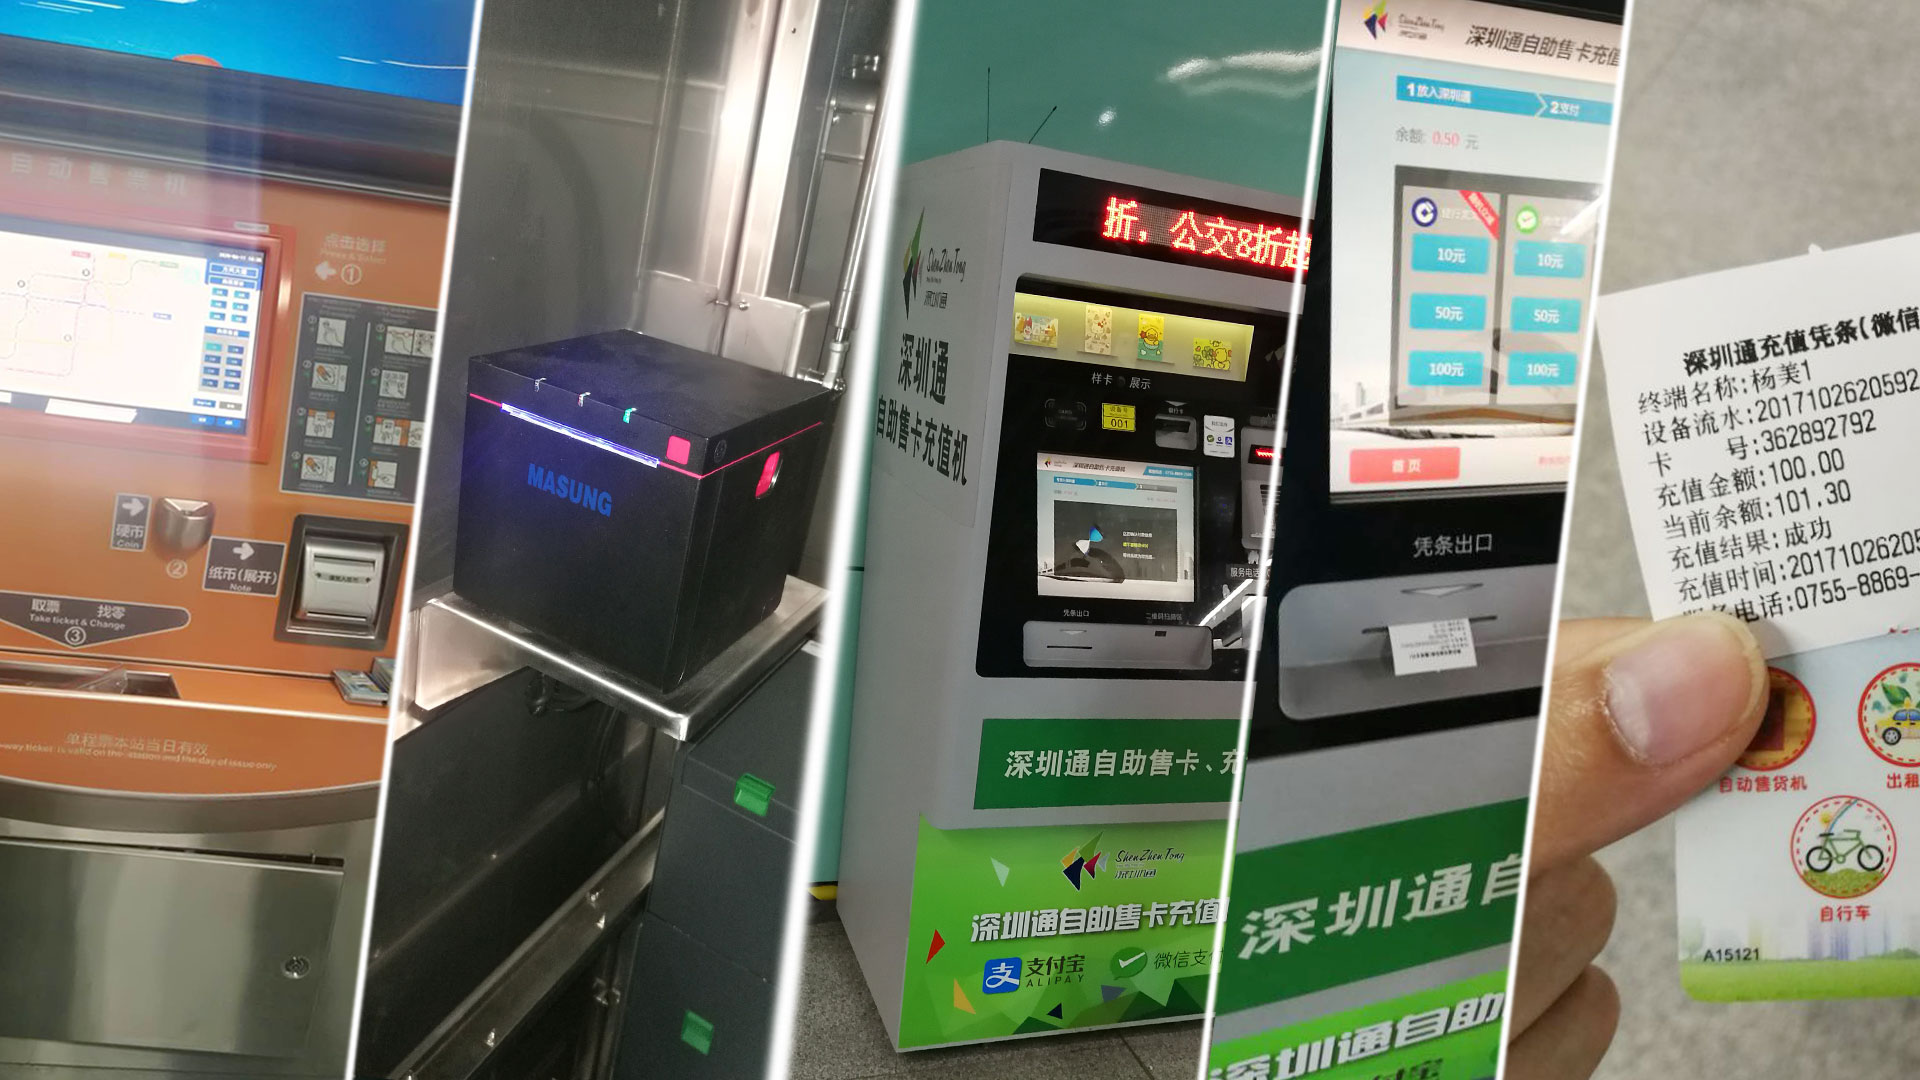 Masung printer helps subway self-service terminal